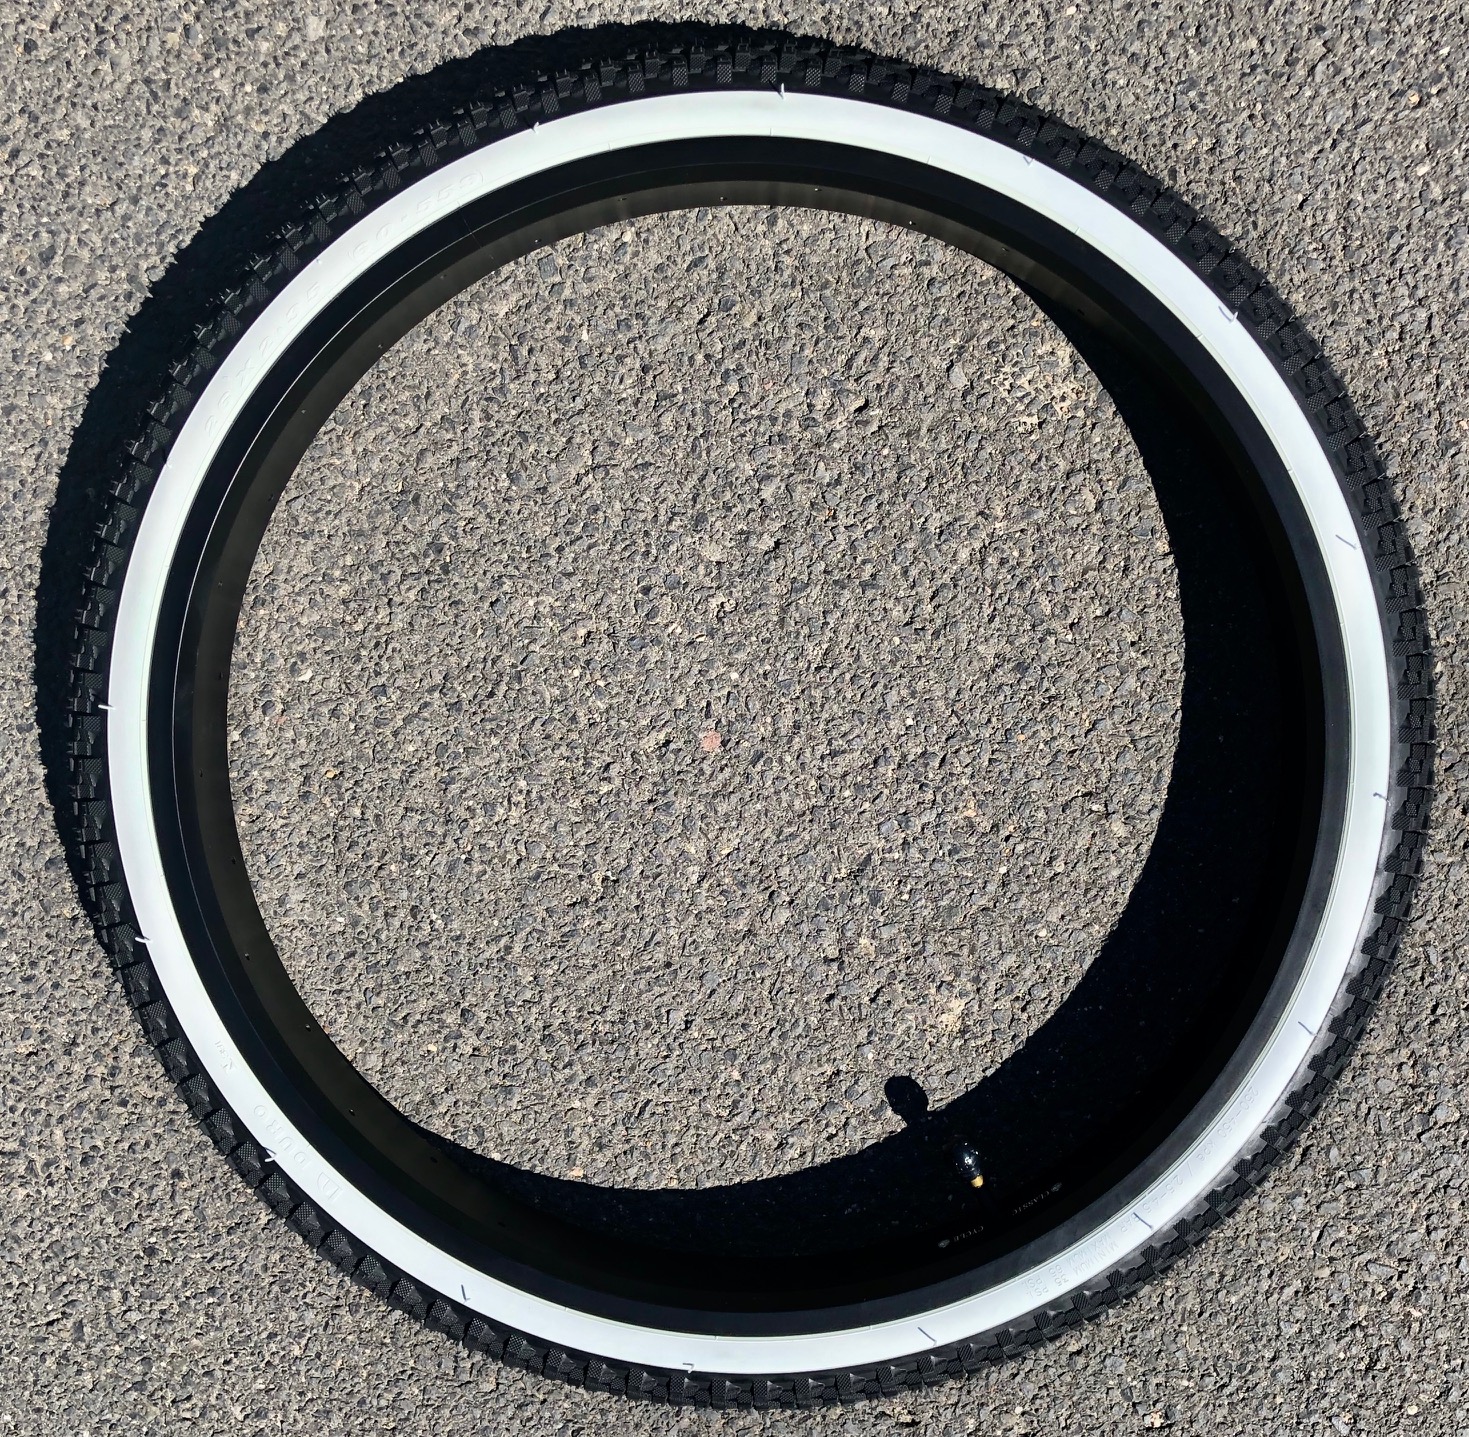 Tire Berm Master 26 x 2.35 whitewall